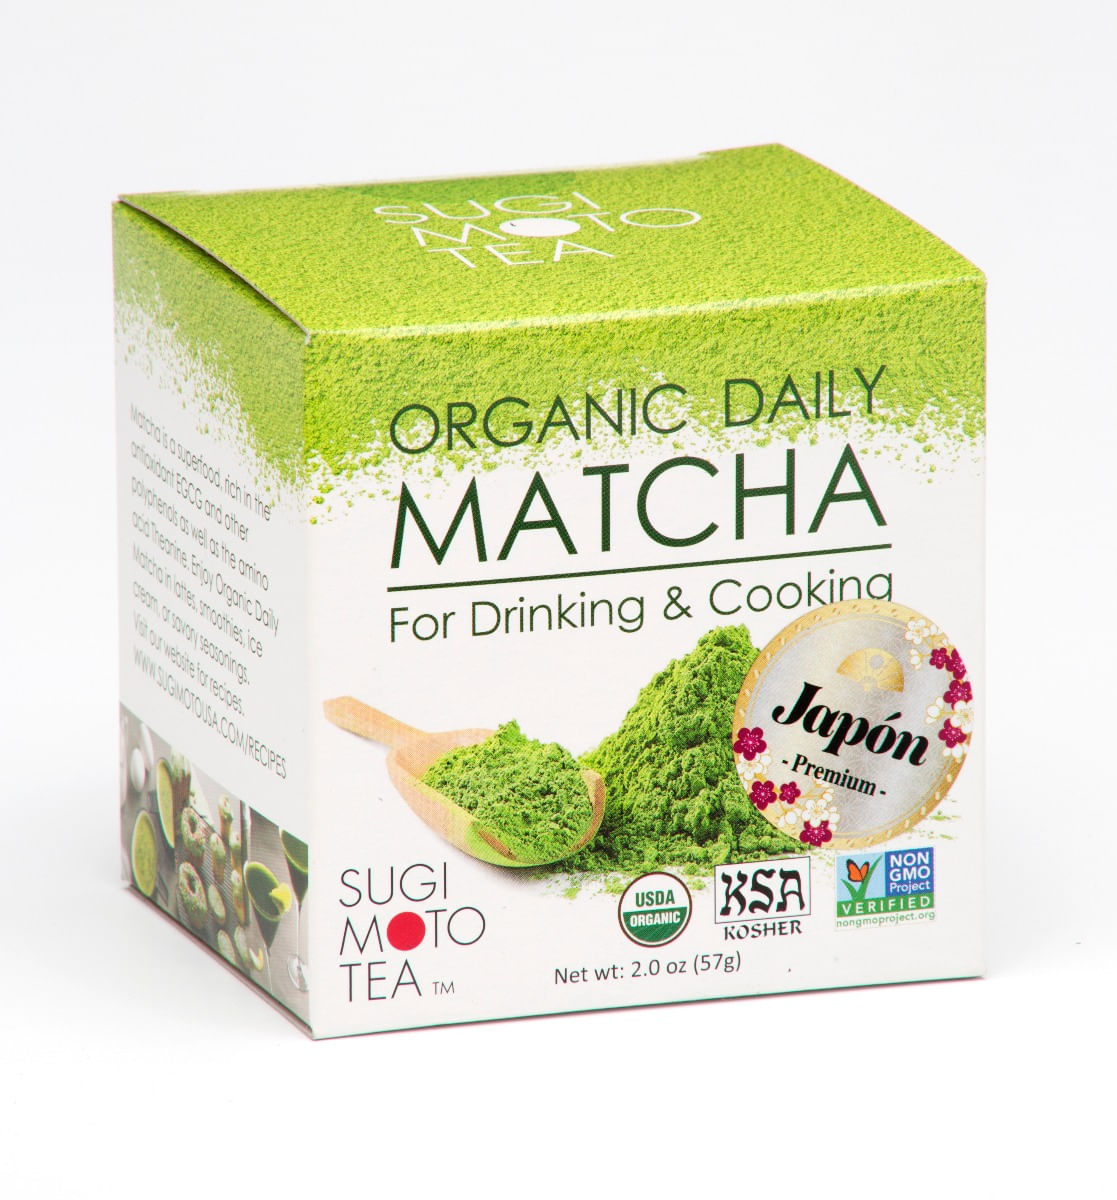 Te Te Verde Matcha Organico Japones 57 g - H-E-B México